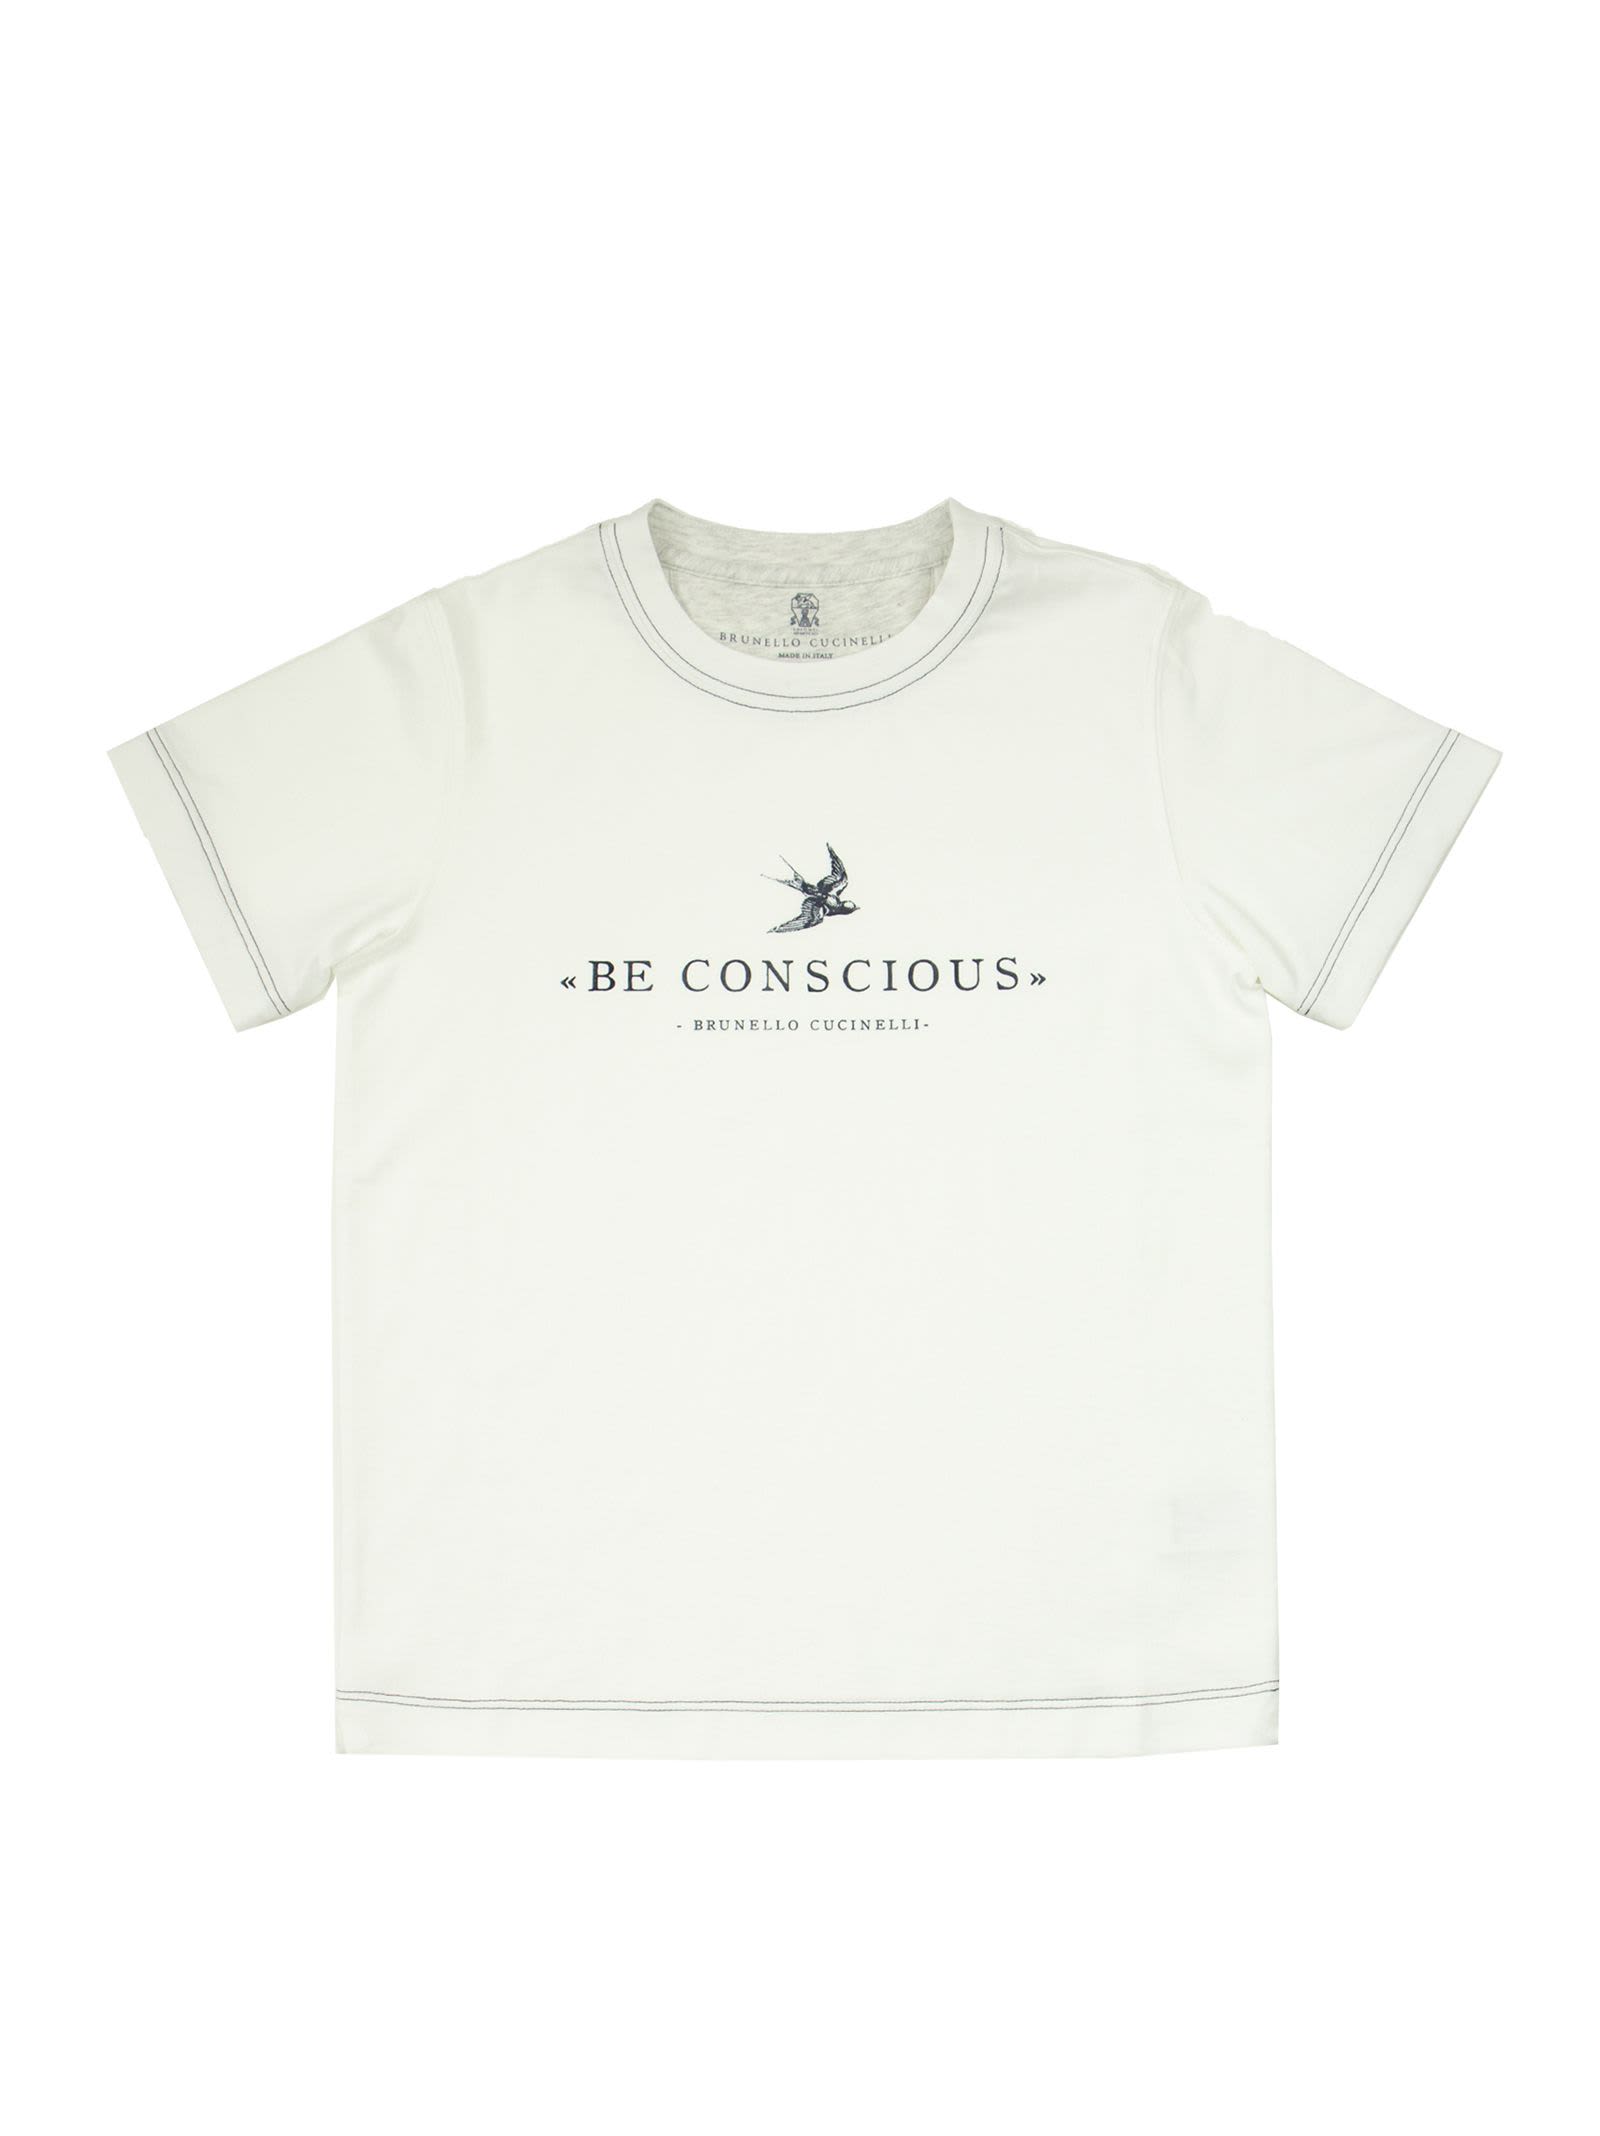 Brunello Cucinelli Cotton Jersey T-shirt With Print